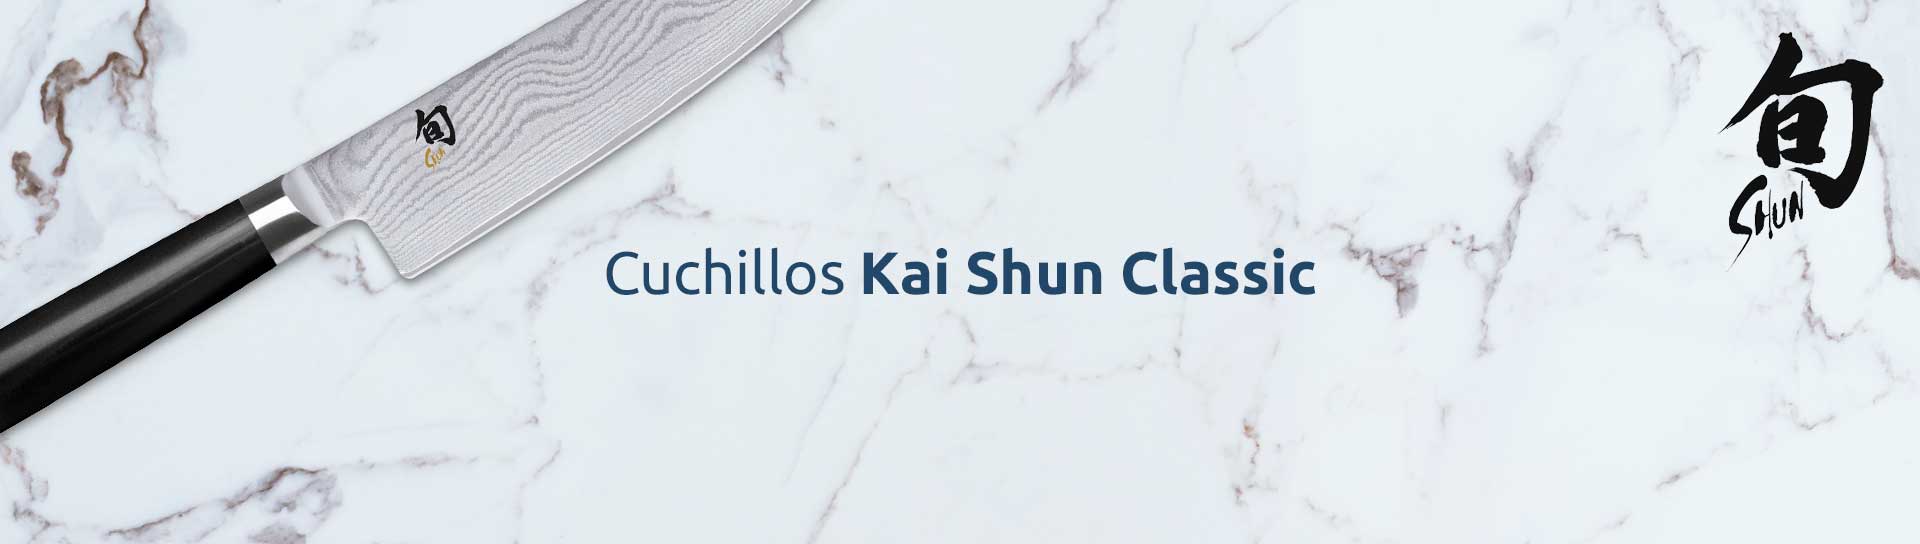 Cuchillos Kai Shun Classic